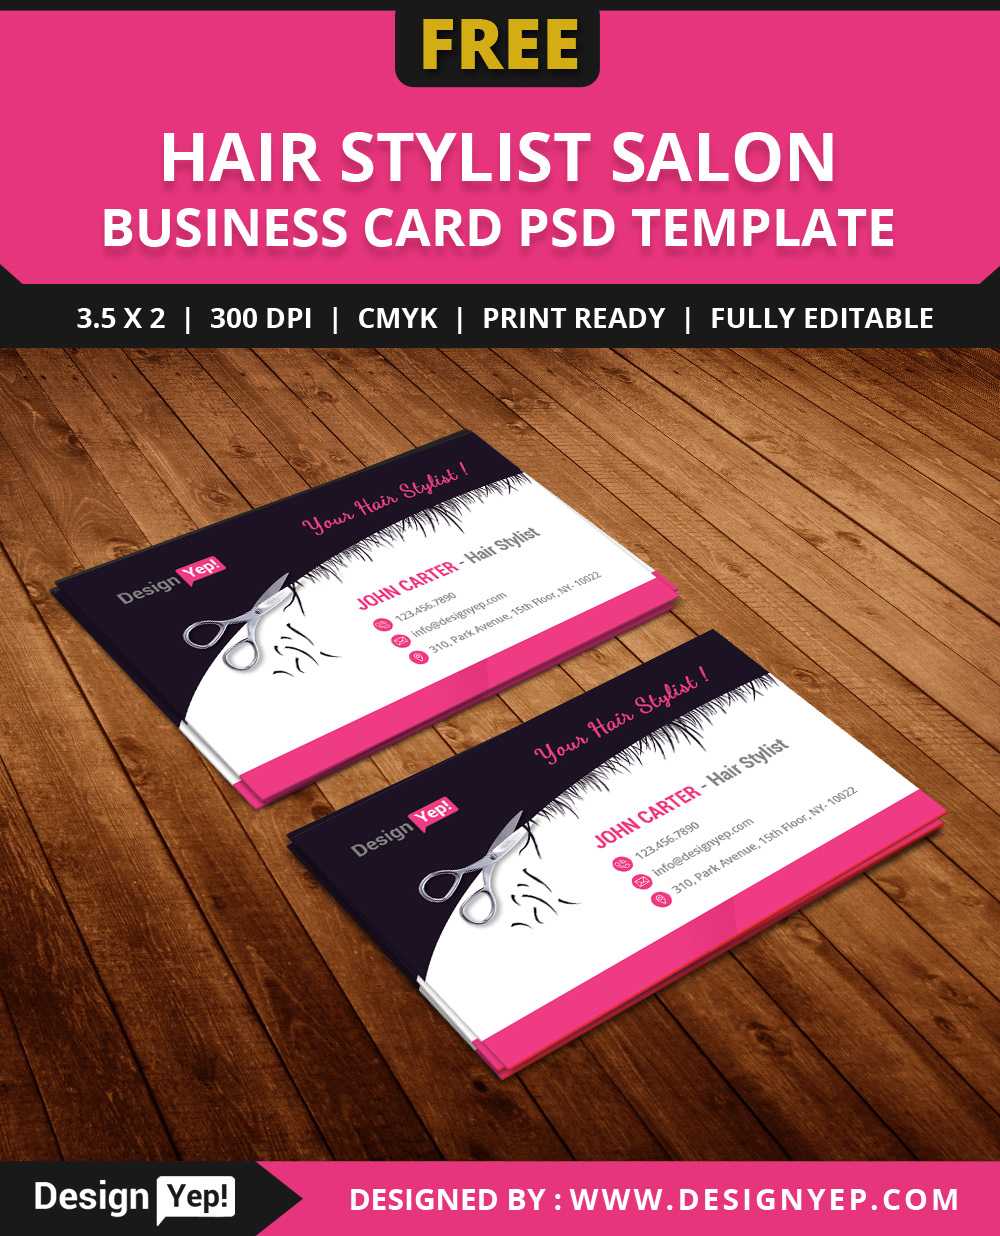 Free Hair Stylist Salon Business Card Template Psd On Behance In Hair Salon Business Card Template